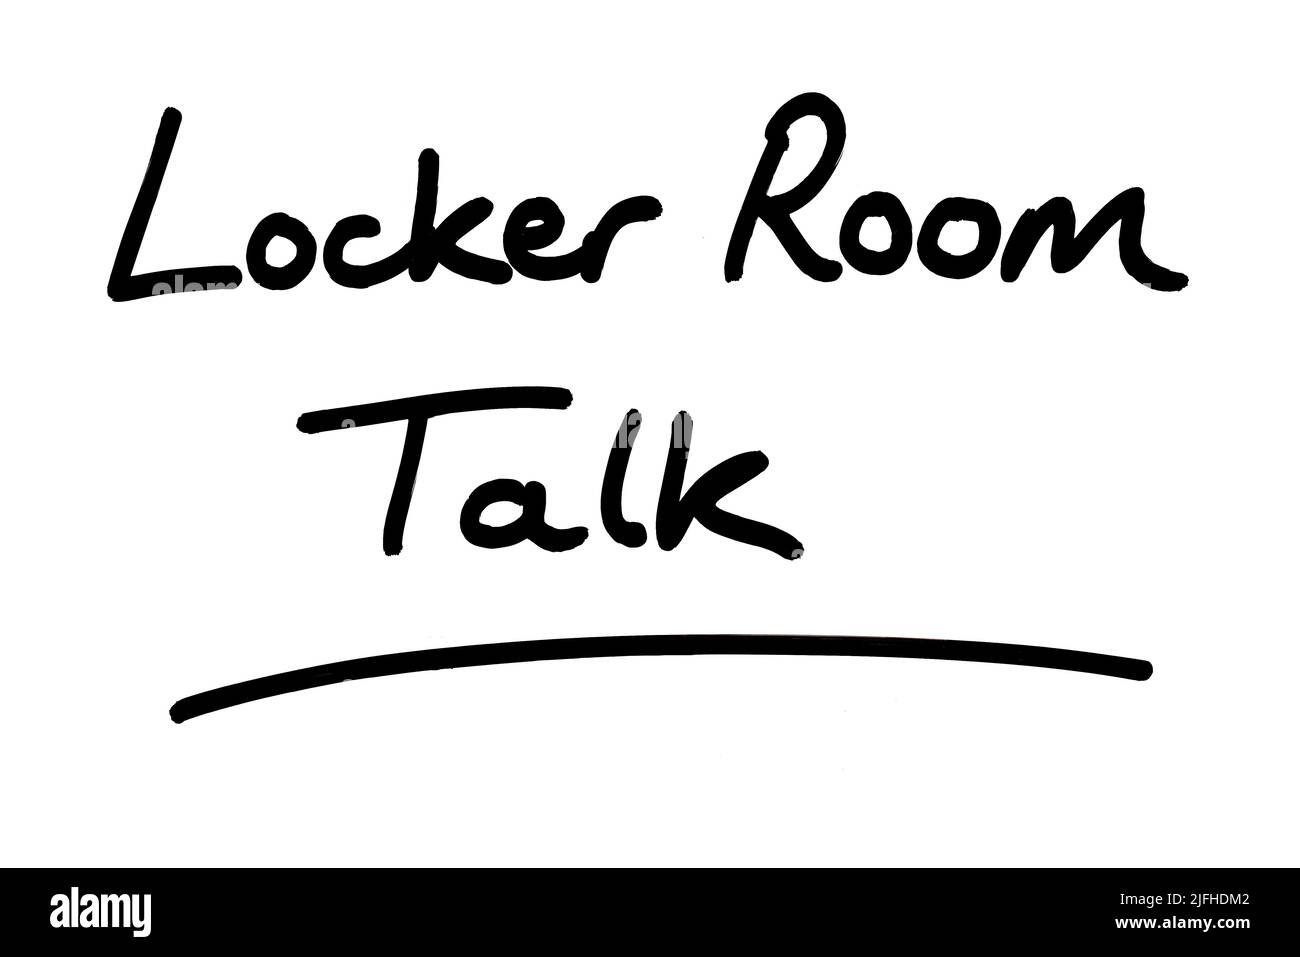 Locker Room Talk, handwritten on a white background. Stock Photo